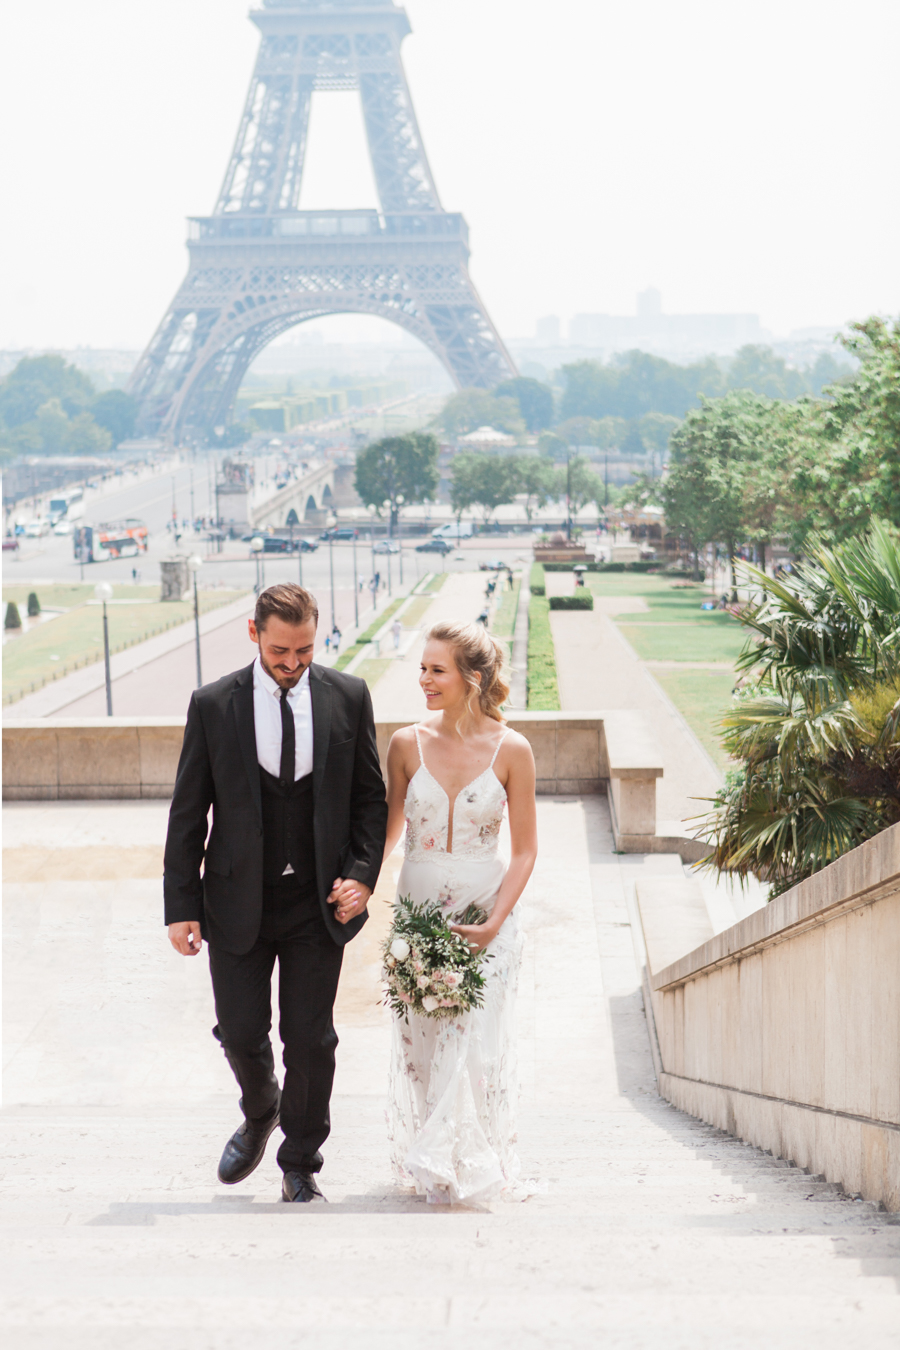 Paris destination wedding photography inspiration by Amanda Karen Photography